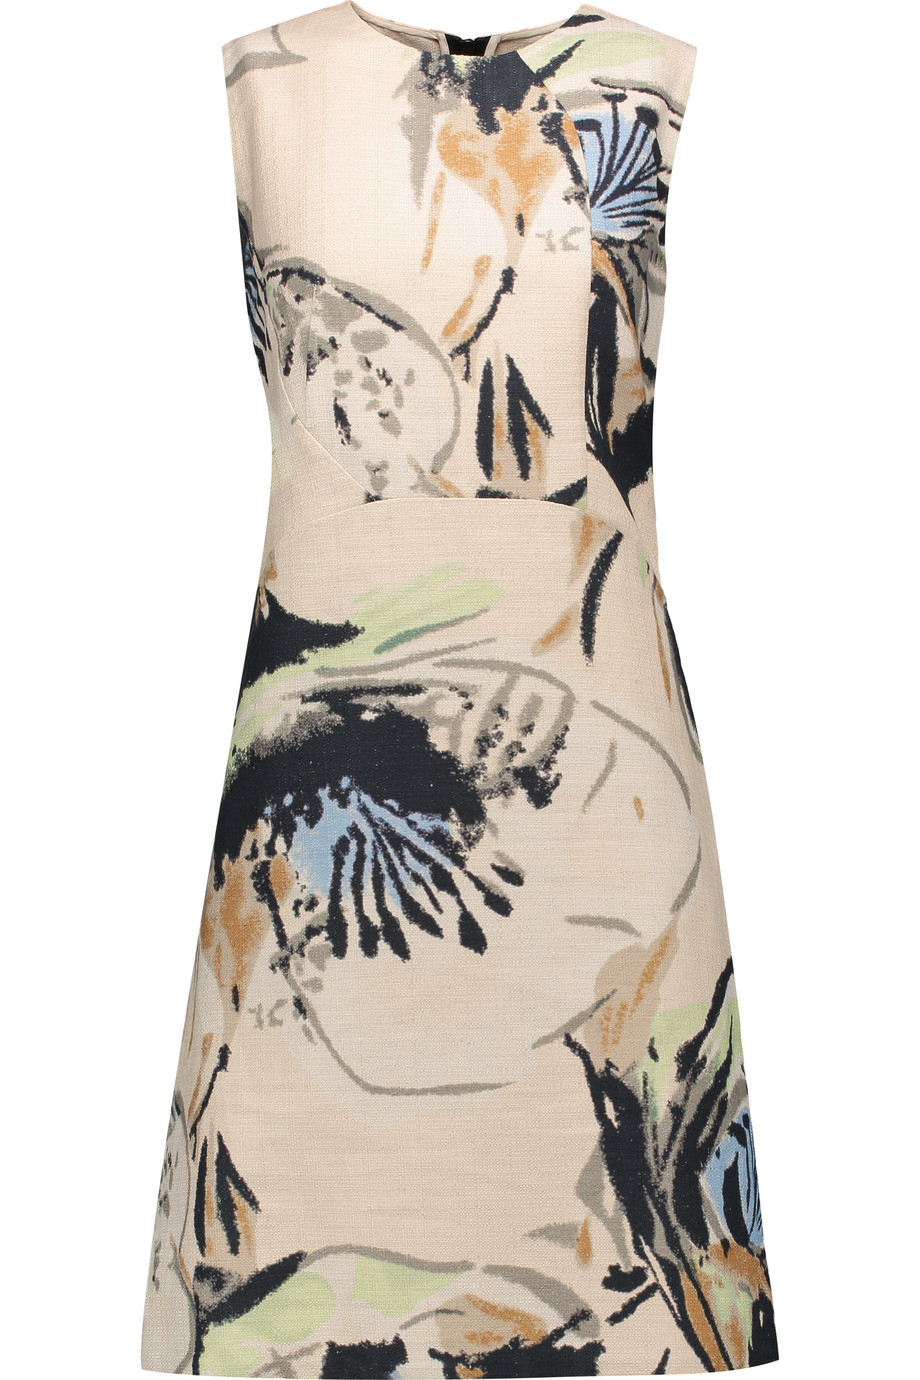 Marni Printed Cotton And Linen-blend Dress | ModeSens